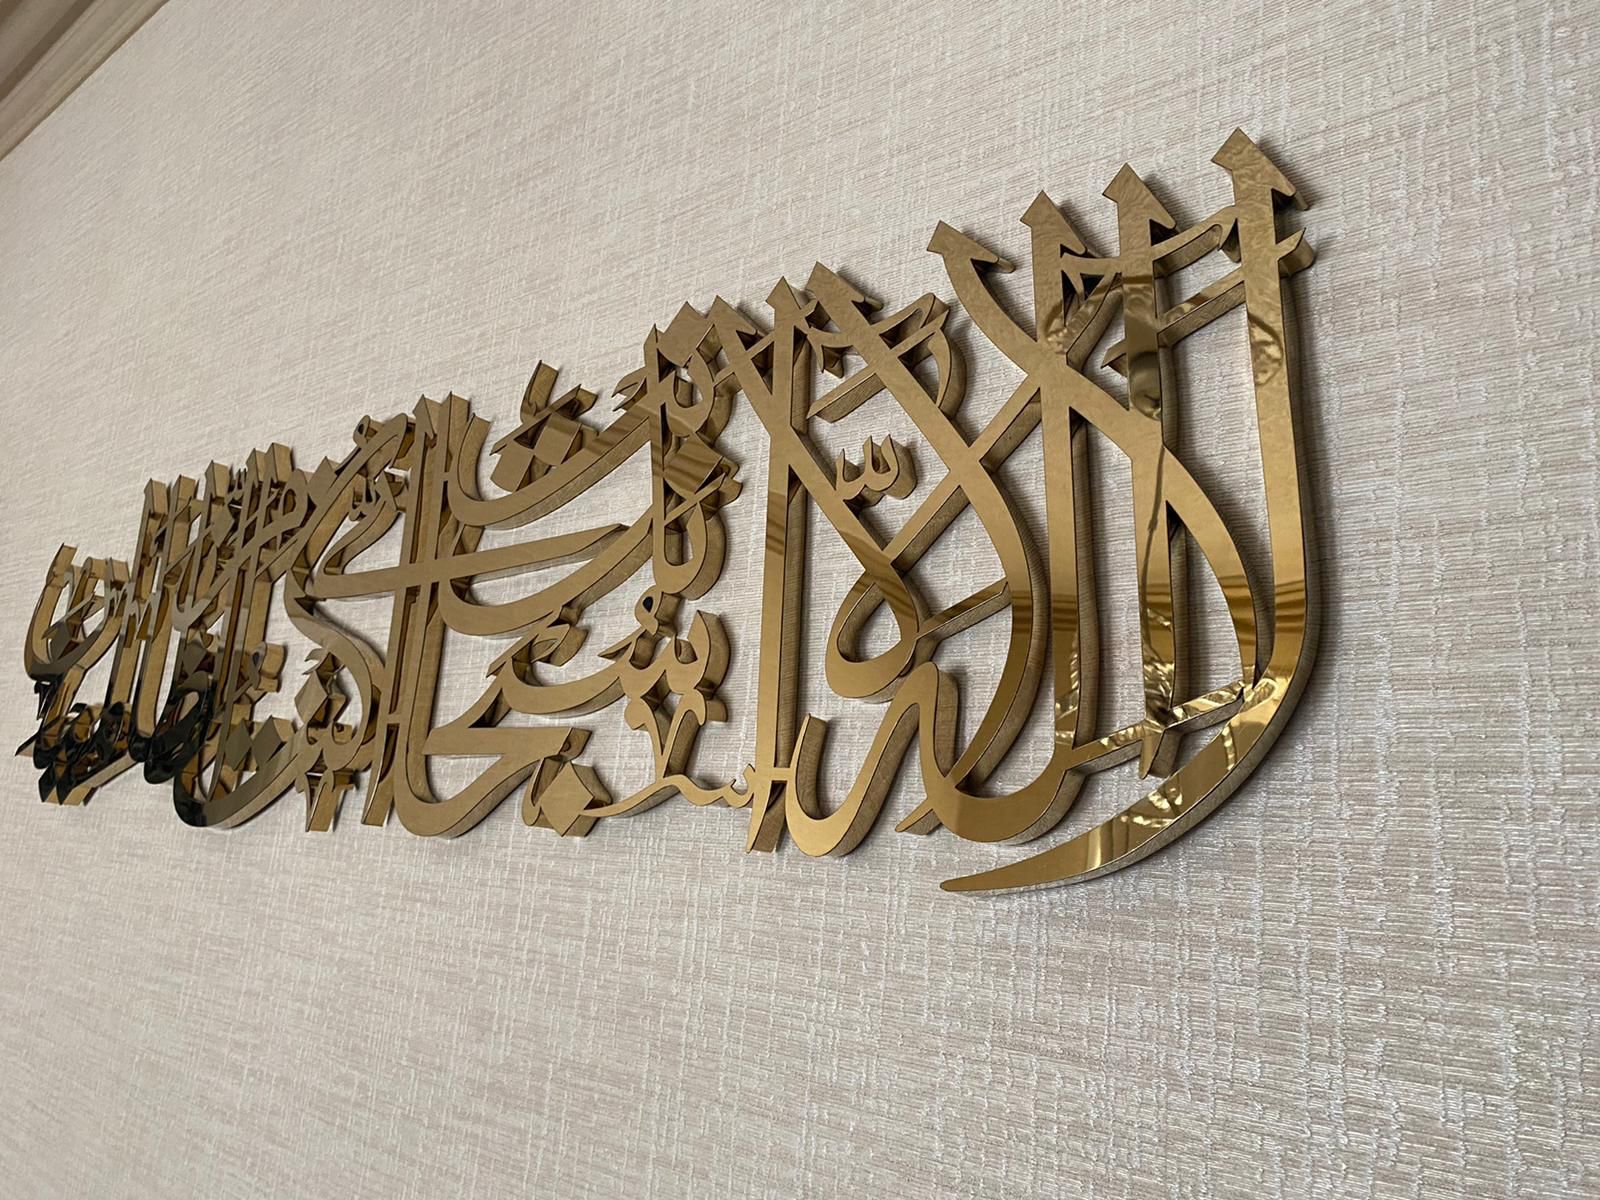 Ayat Kareema In Arabic Calligraphy Islamic Wall Art, Tasbih Yunus Wall Art Calligraphy,3D Stainless Steel Islamic Metal Wall Art